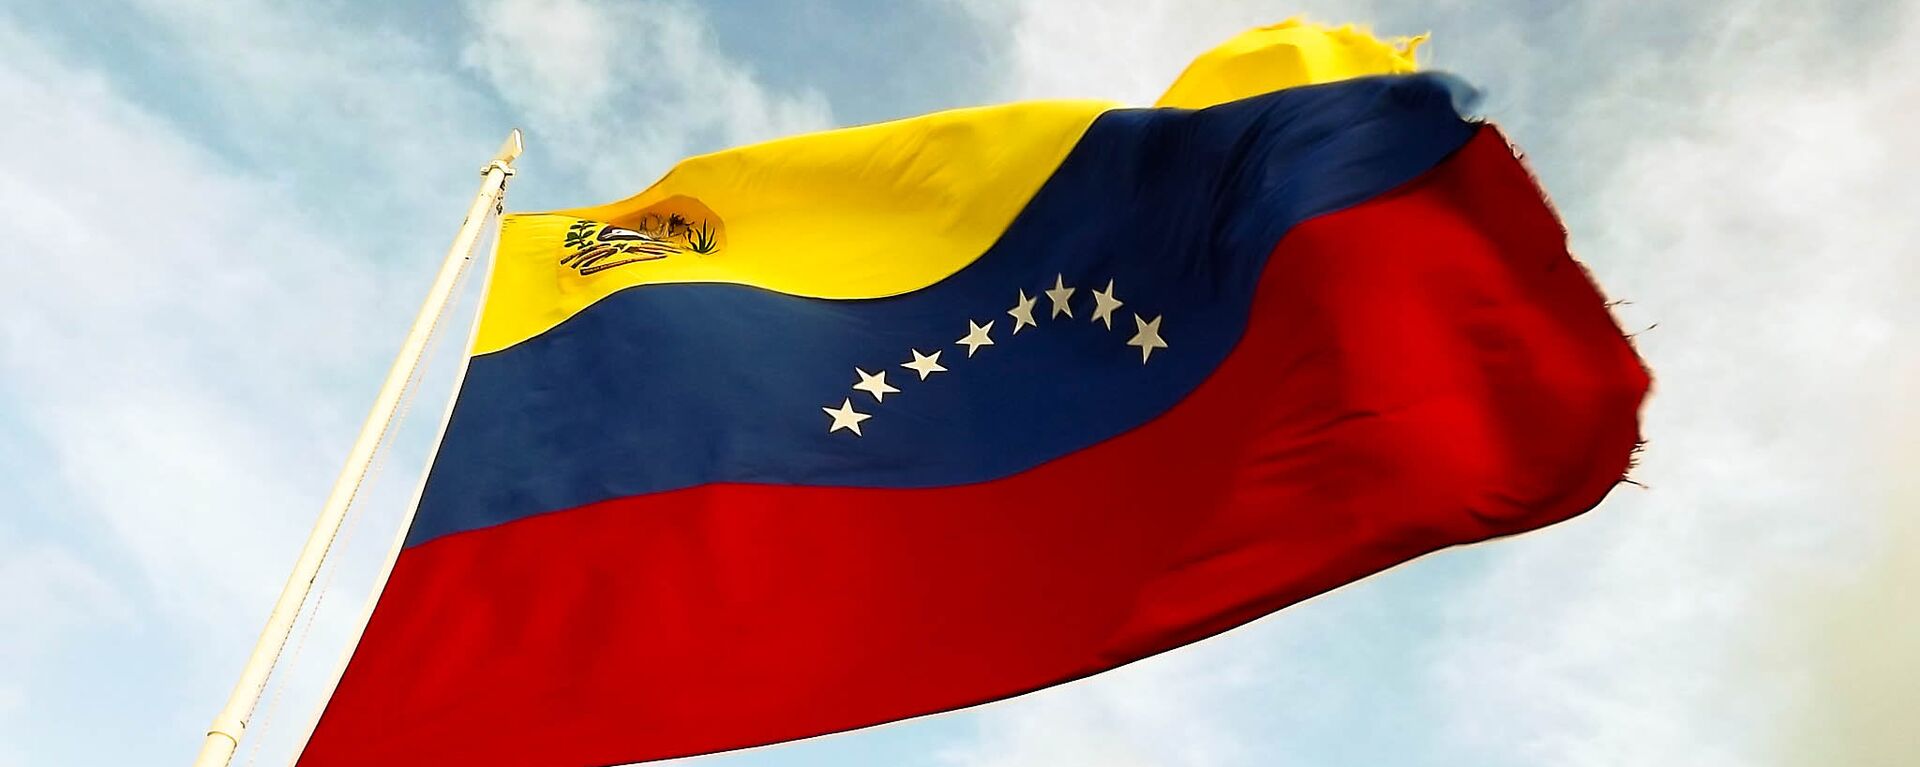 Bandera de Venezuela - Sputnik Mundo, 1920, 02.08.2021